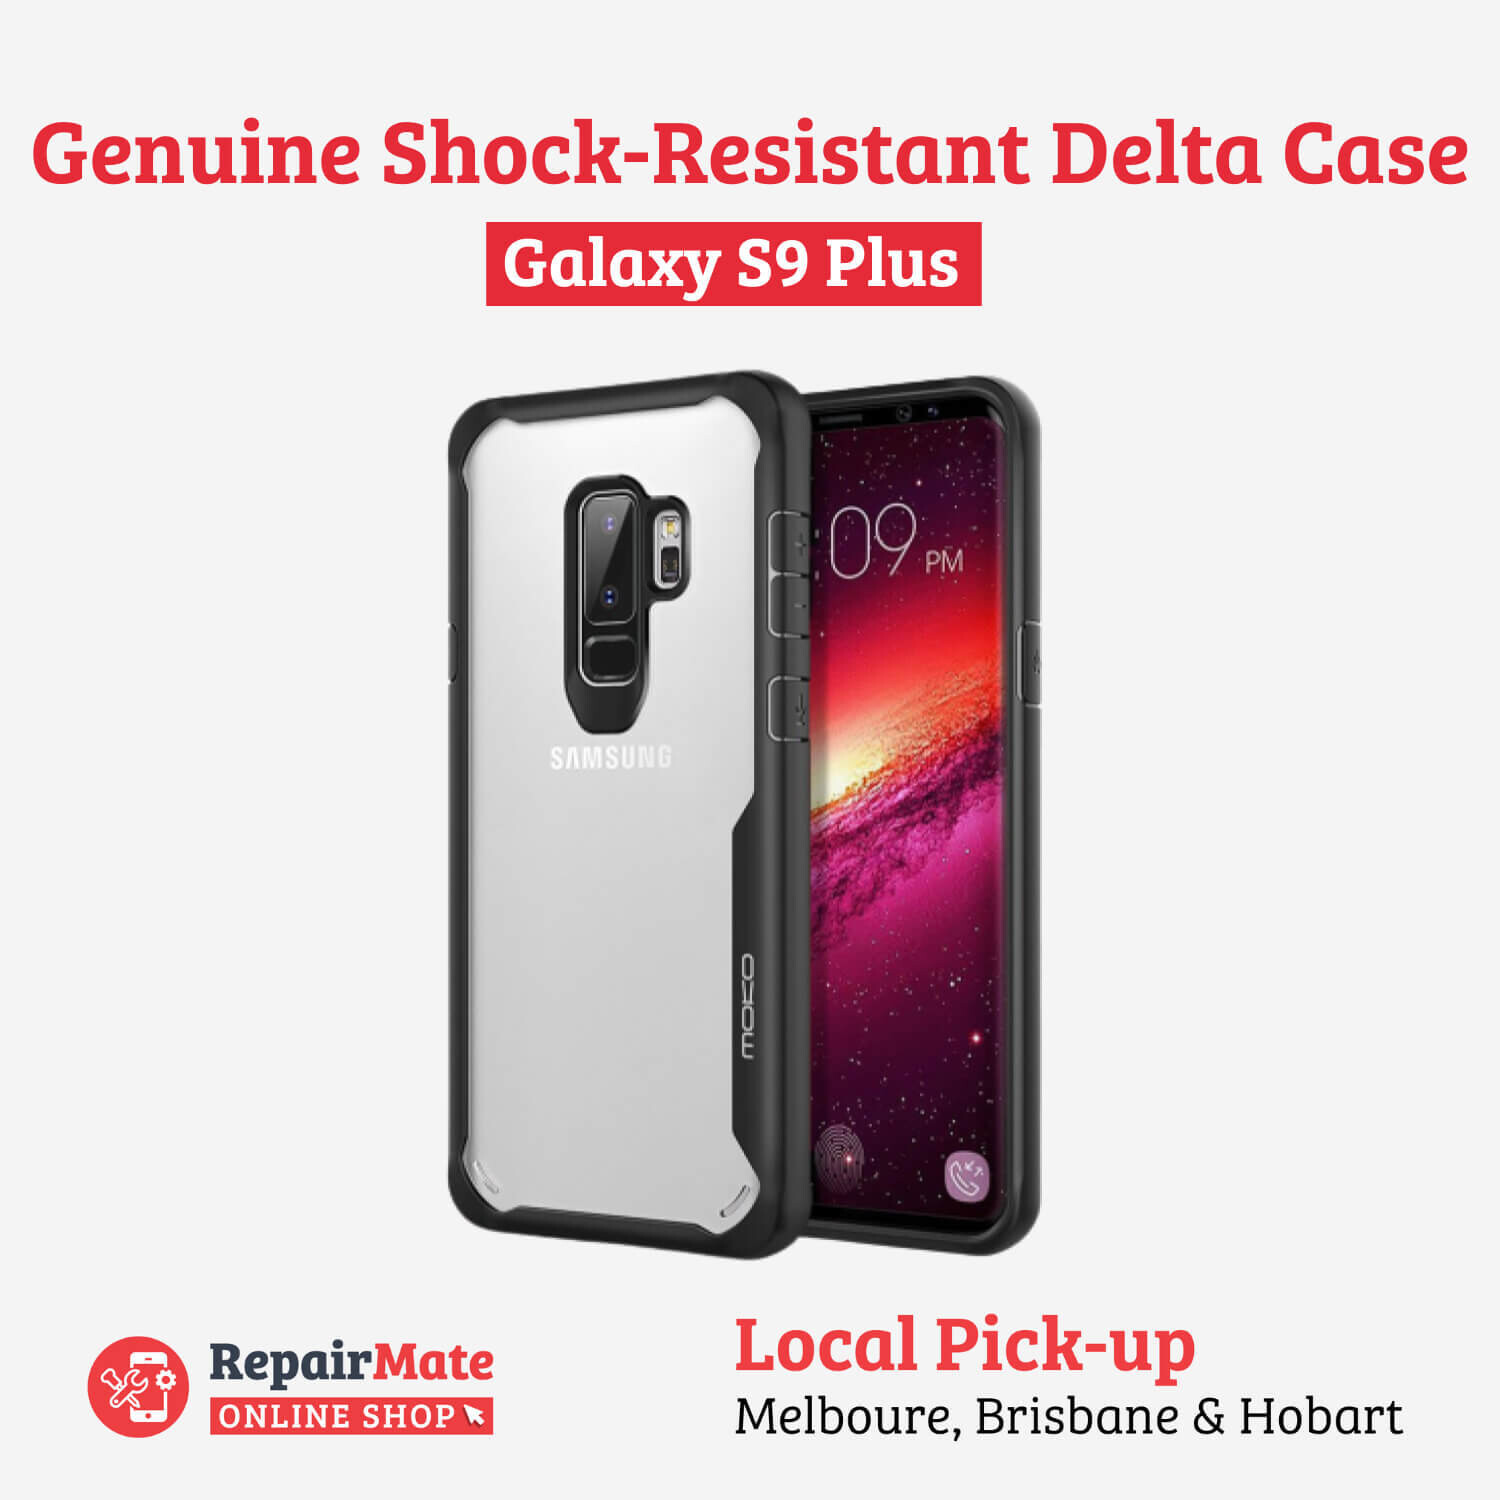 Samsung Galaxy S9 Plus Genuine Shock-Resistant Delta Case